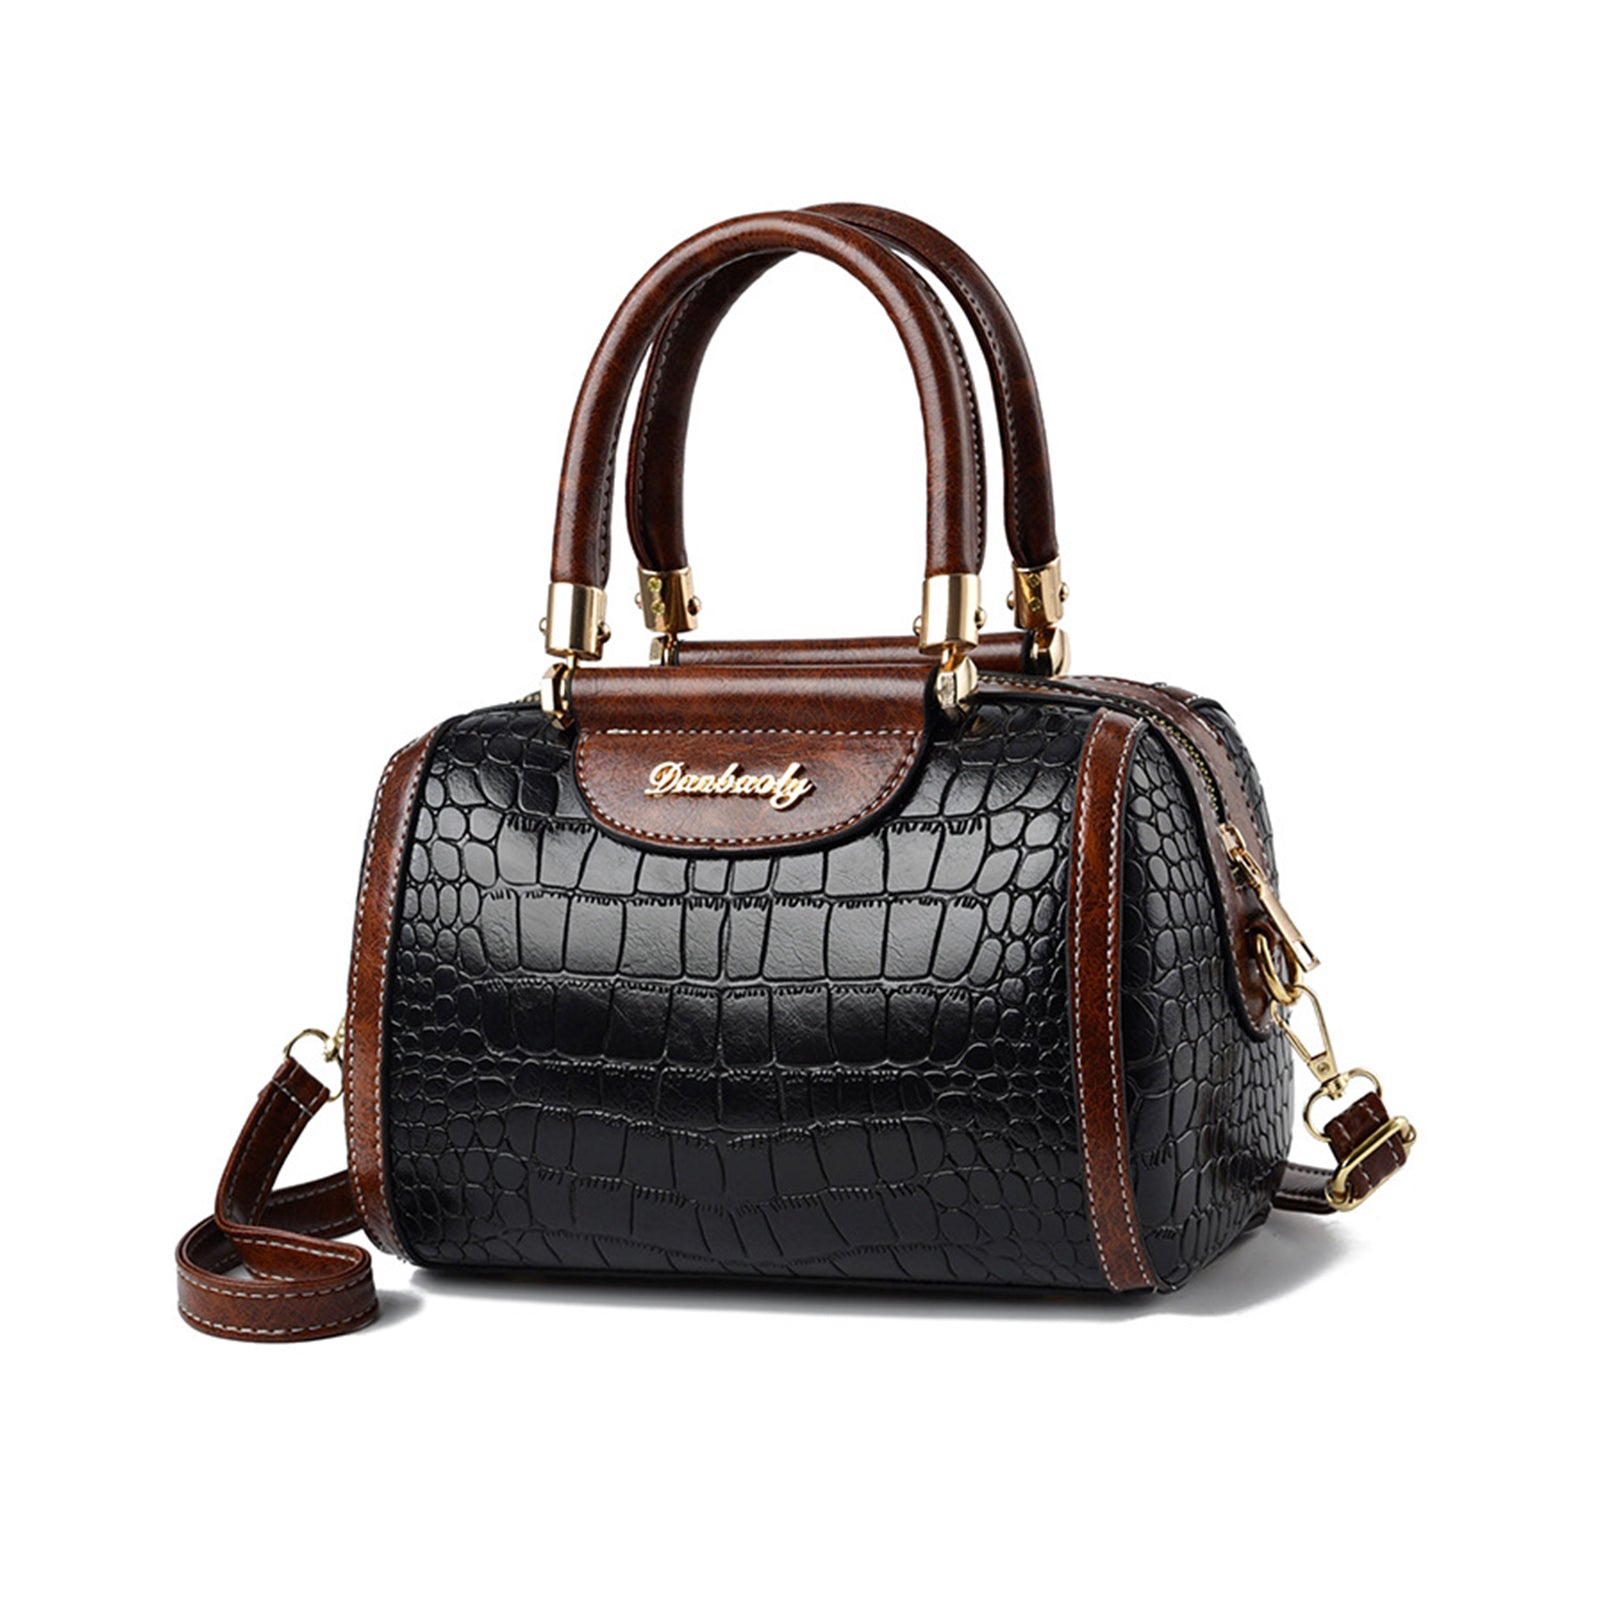 NICOLE & DORIS Women Handbags Crossbody Bag Fashion Satchel Bags